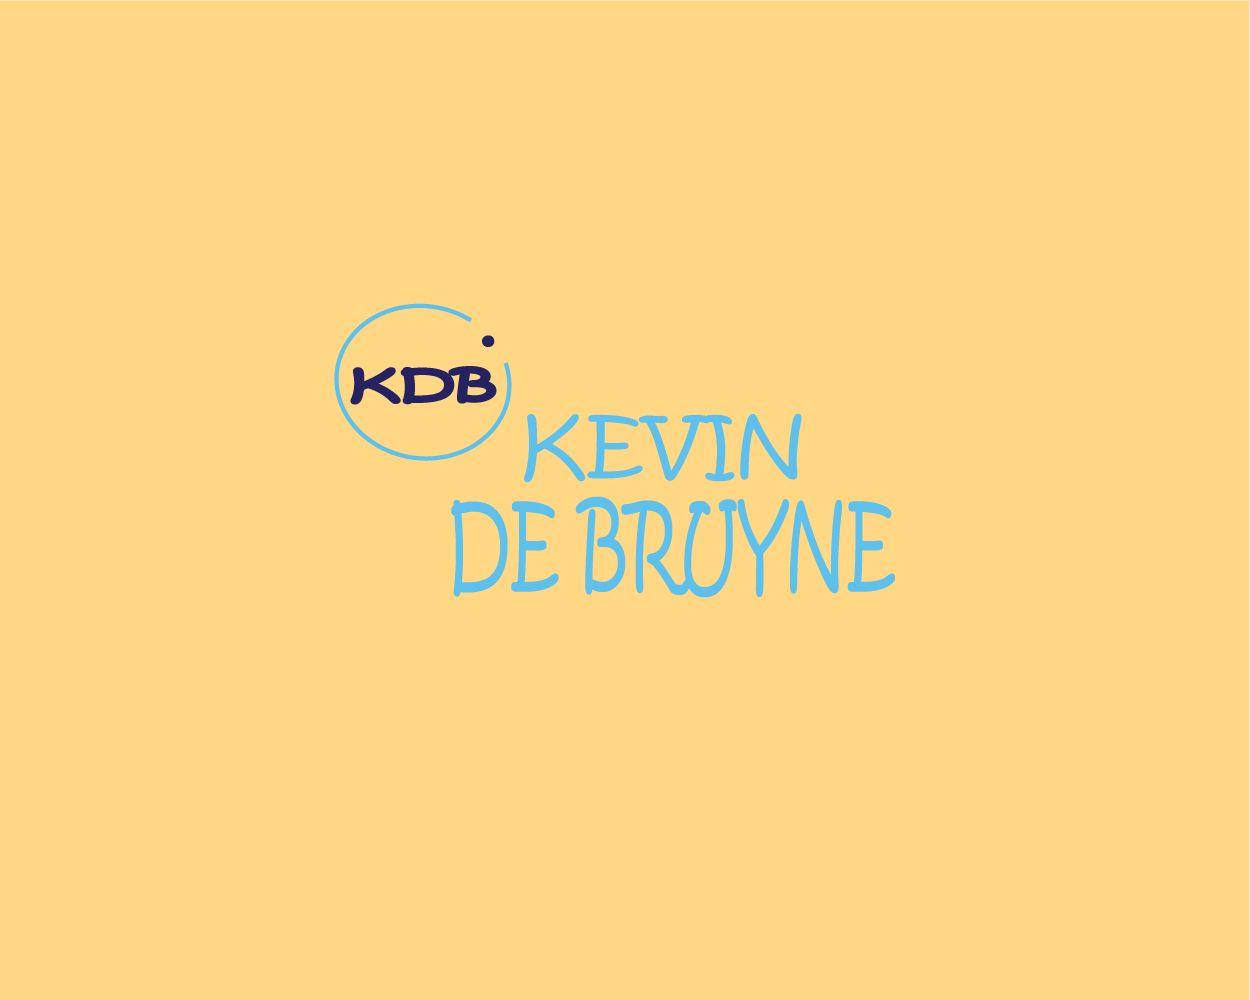 Kdb Logo - MOHAMEDSGAP: Kevin De Bruyne ( KDB ) Logo.. Man City Player KDB Logo